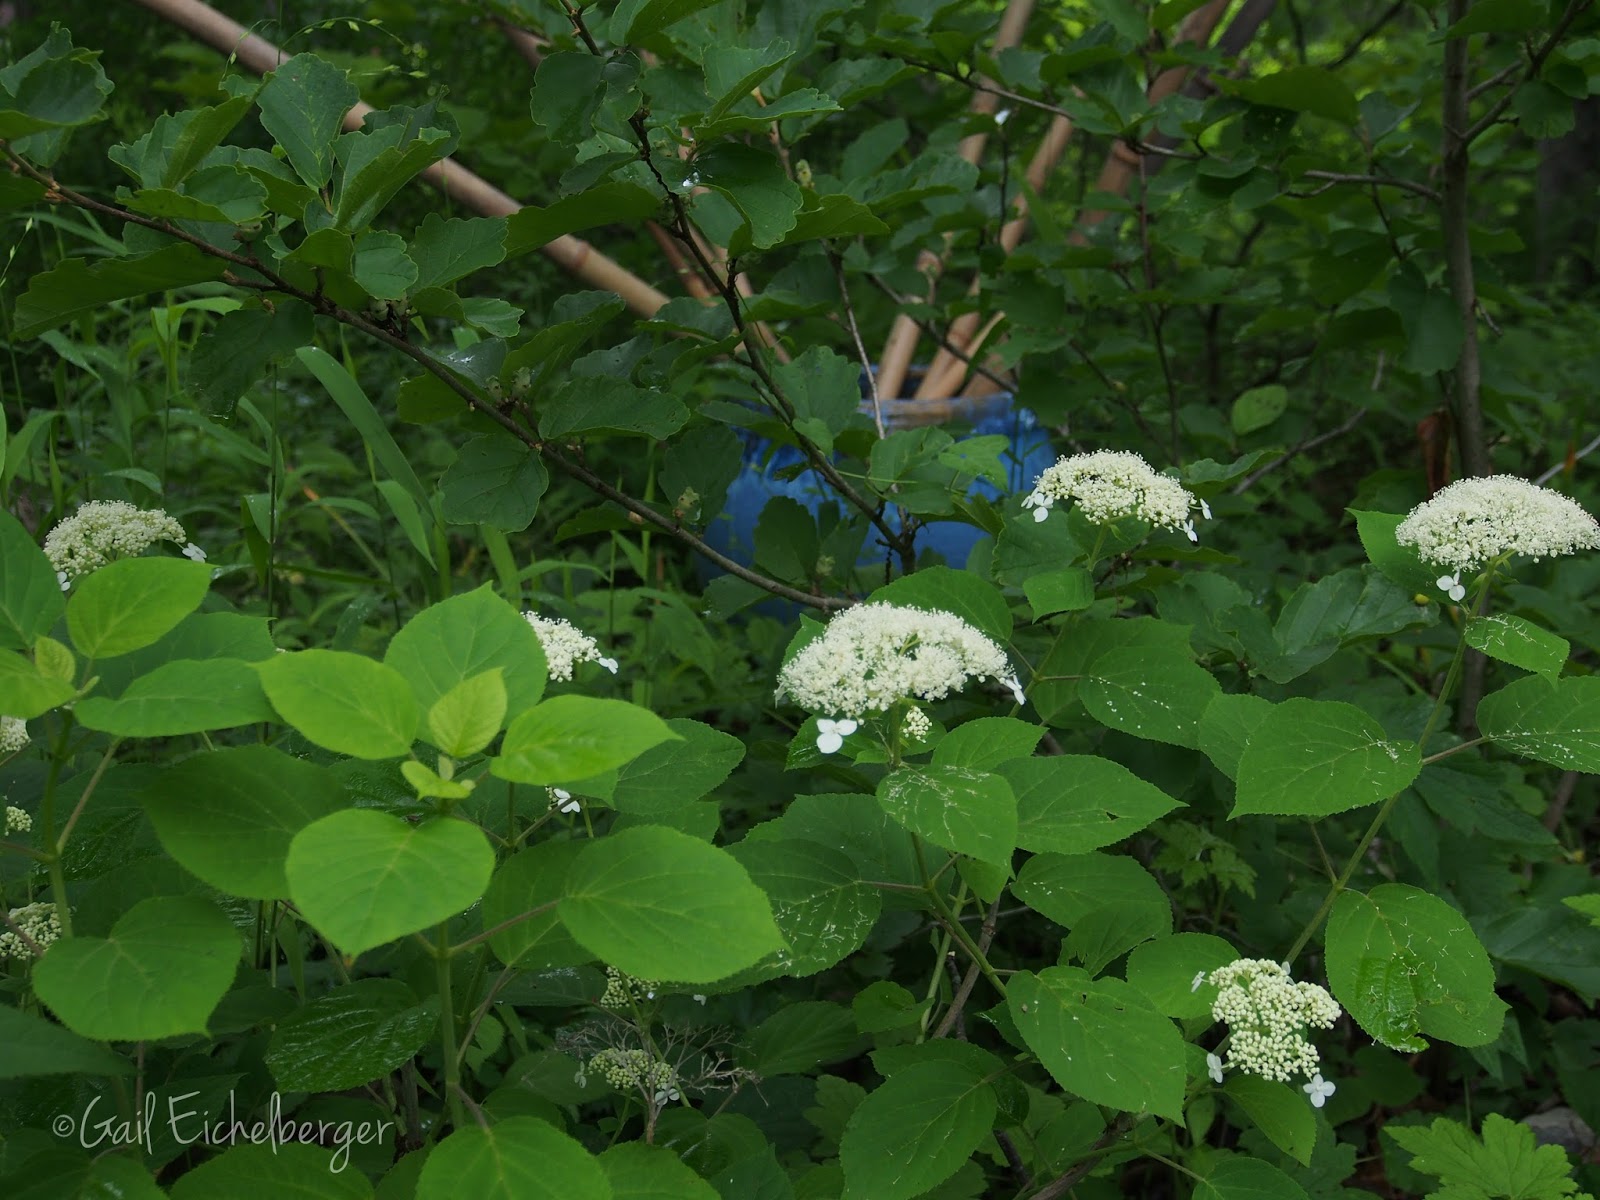 Botanic Bleu Tips To Get Hydrangeas To Bloom